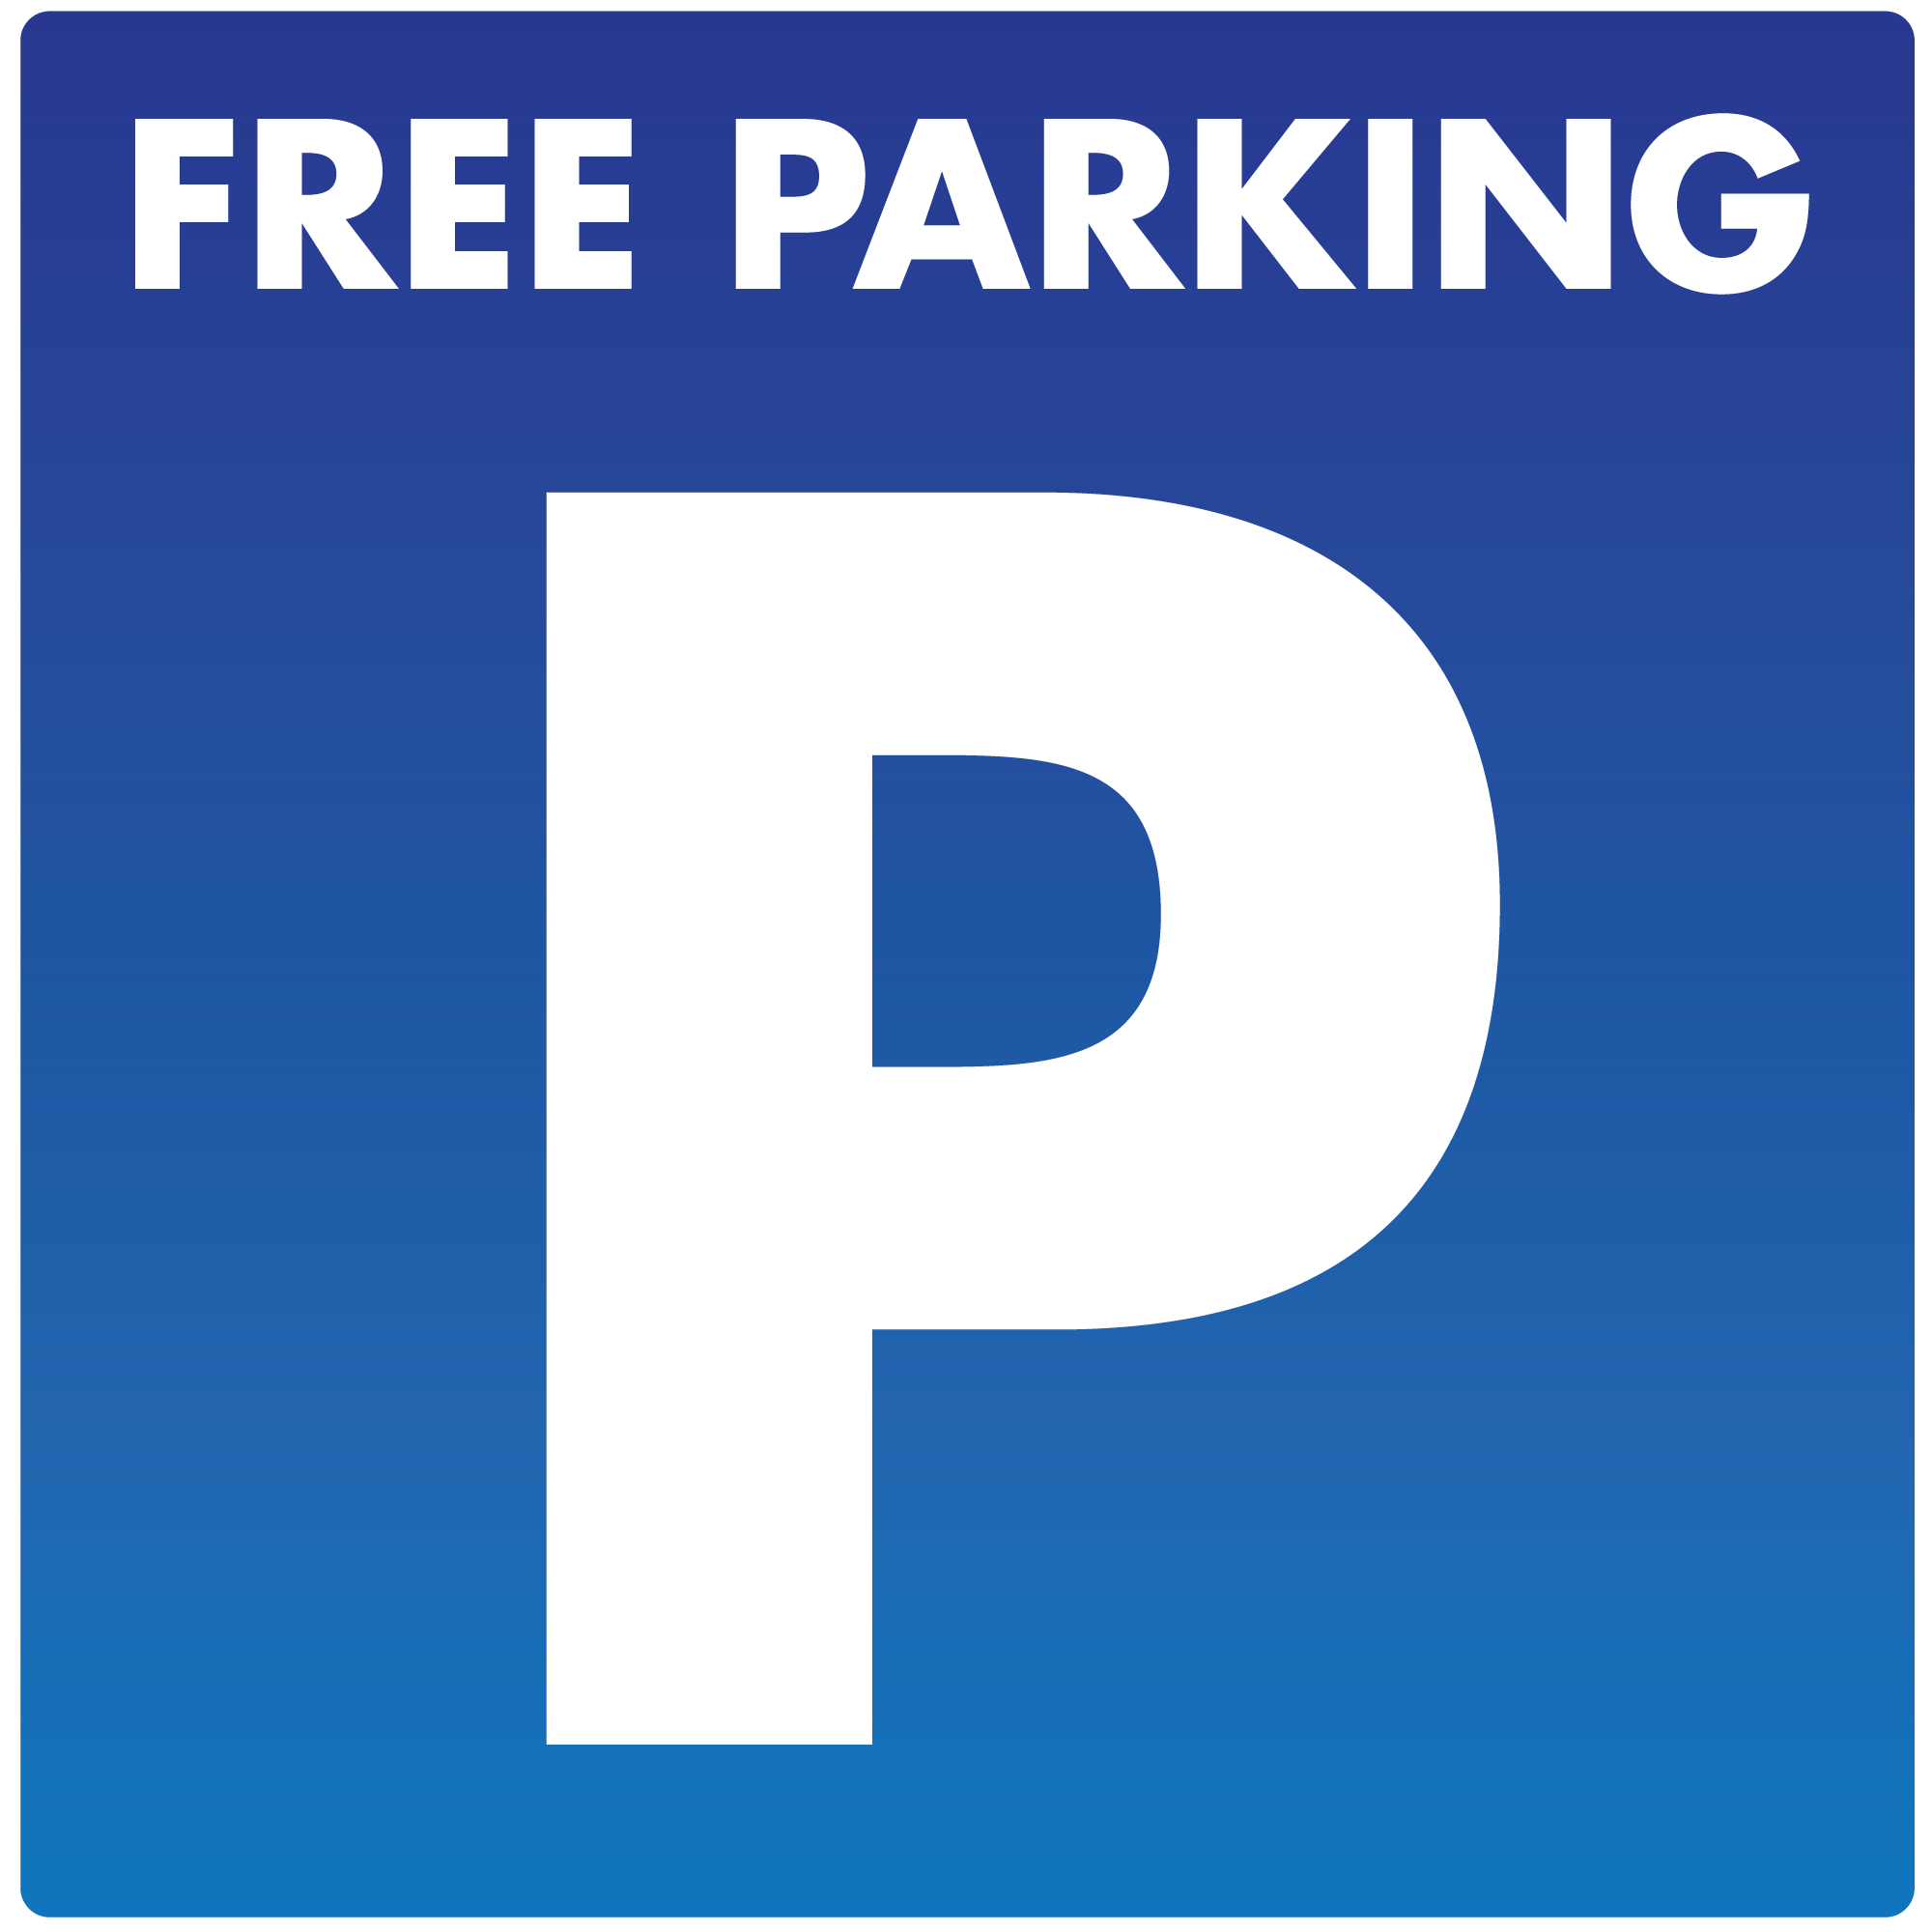 Free parking photo